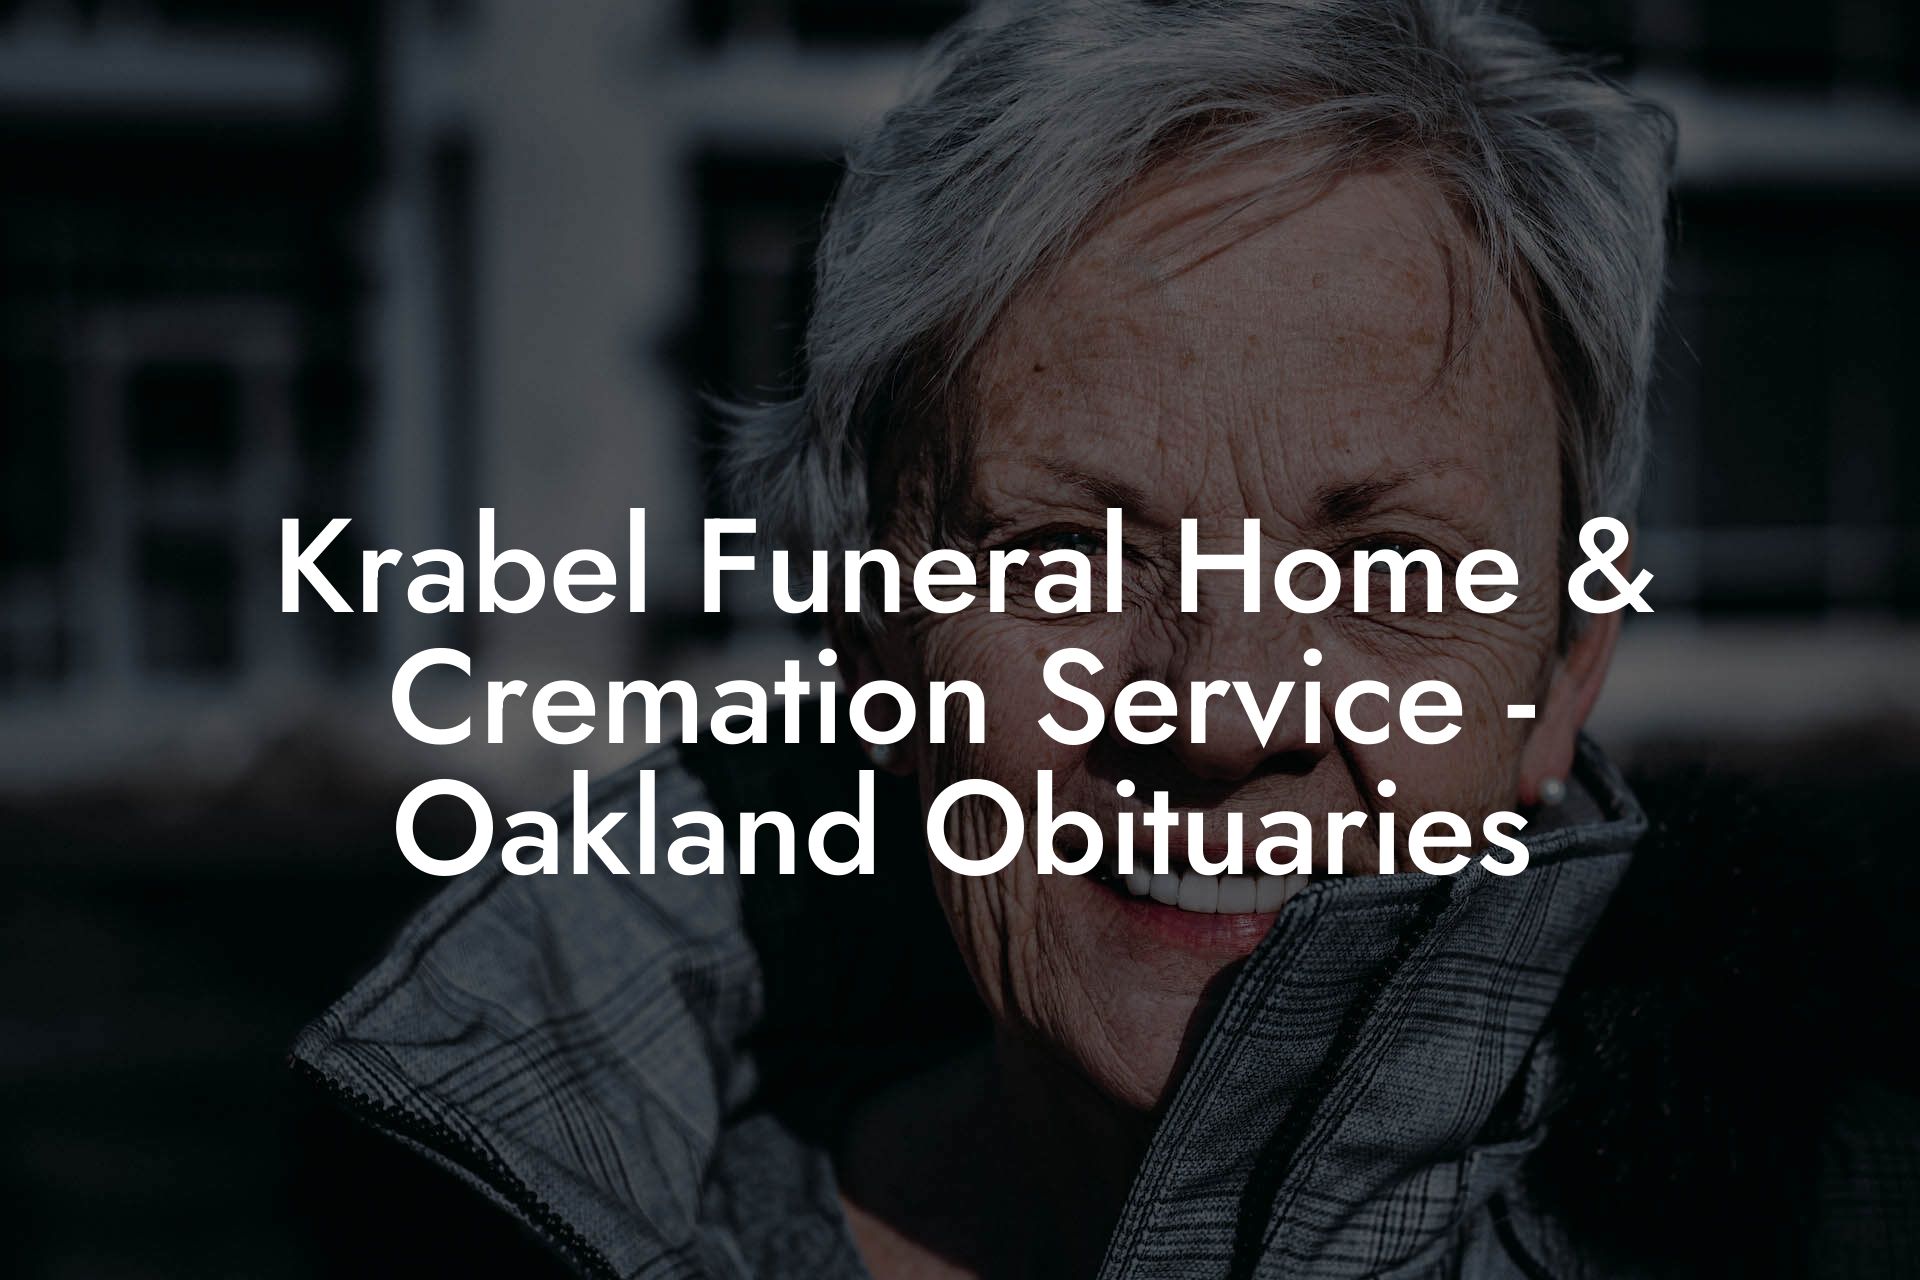 Krabel Funeral Home & Cremation Service - Oakland Obituaries